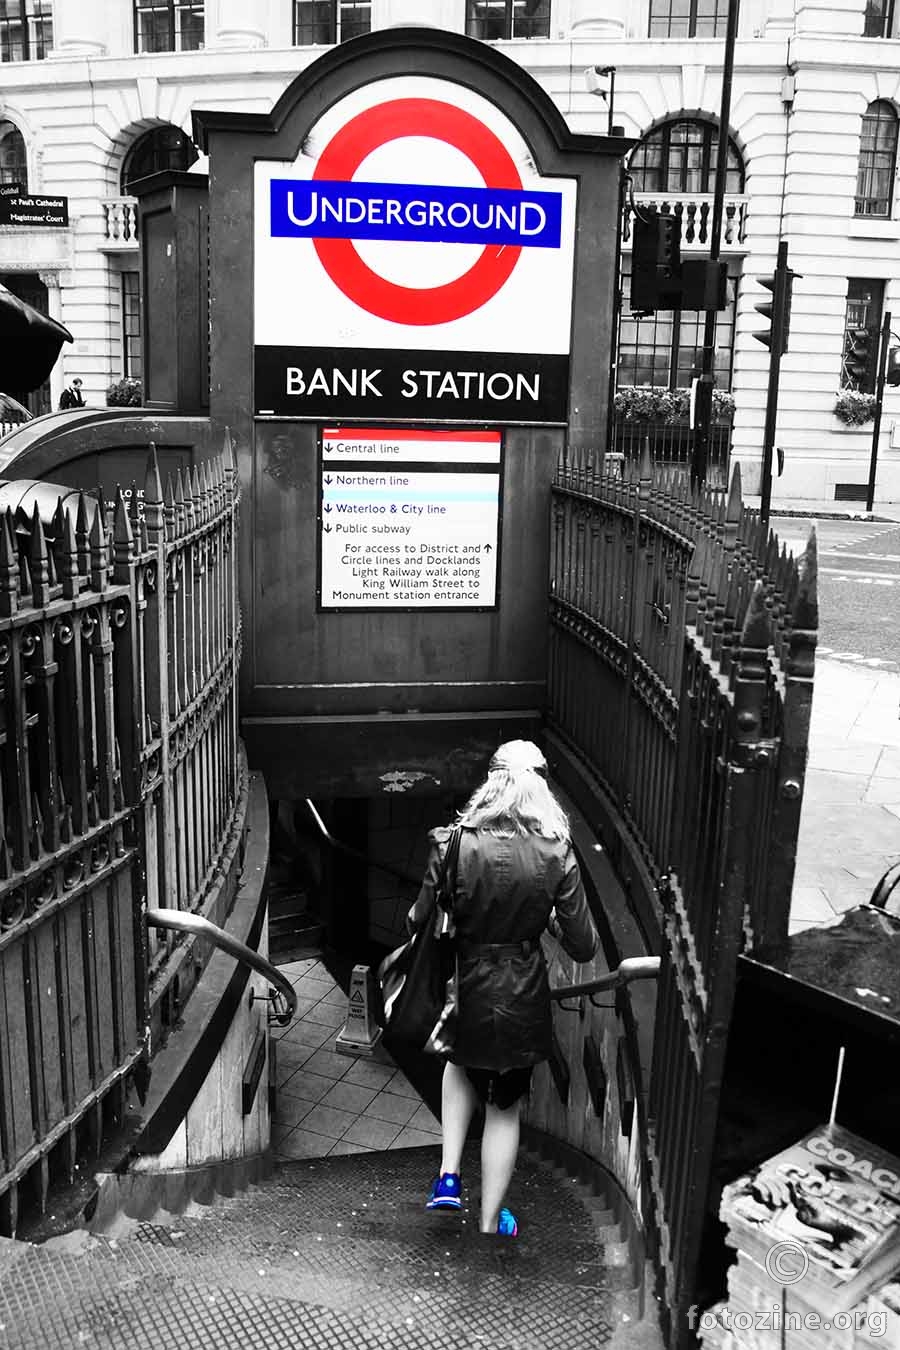 Bank station, London...